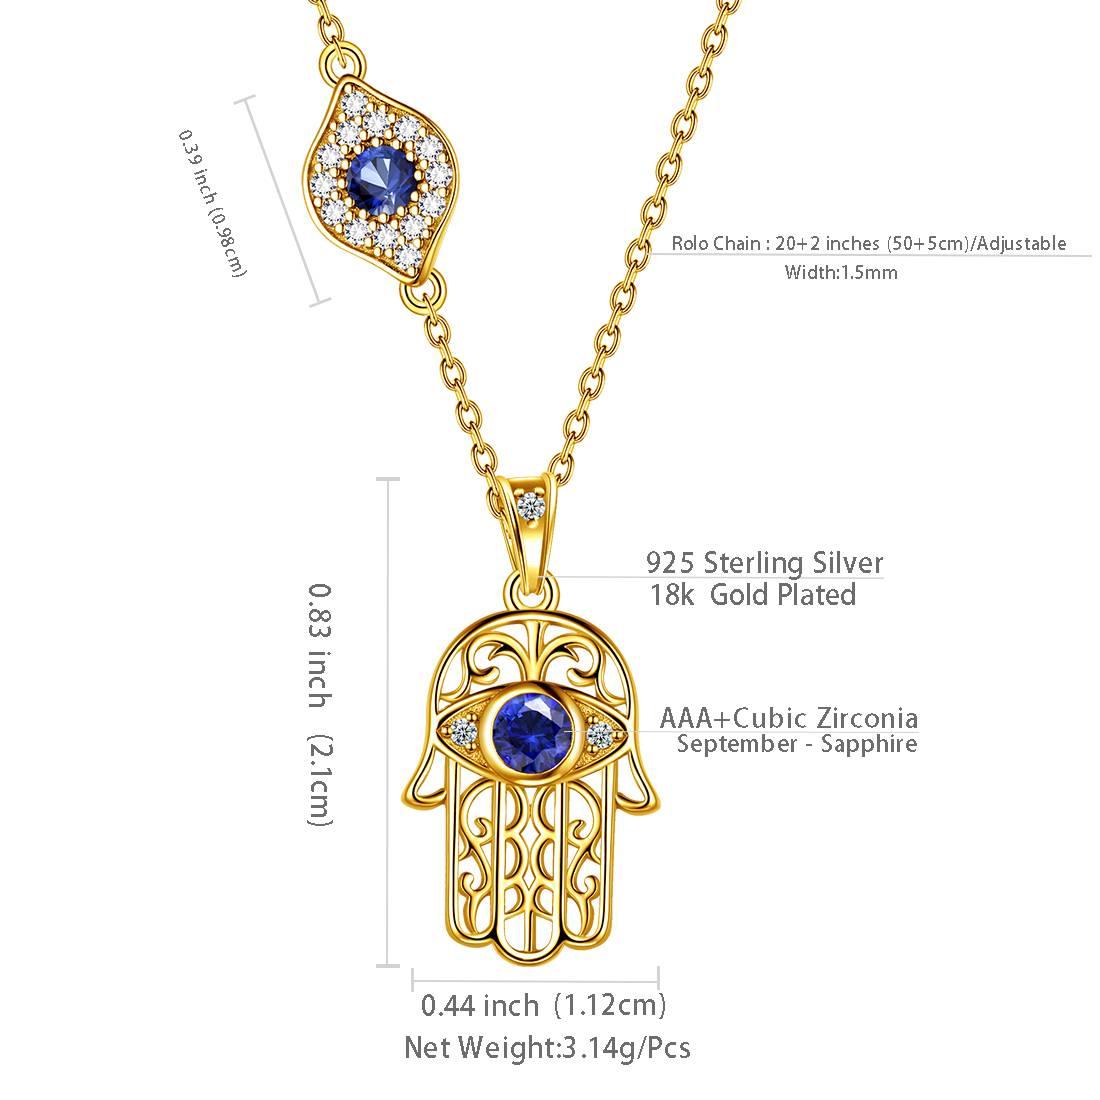 Hamsa Hand of Fatima with Evil Eye Pendant Necklace - Necklaces - Aurora Tears Jewelry